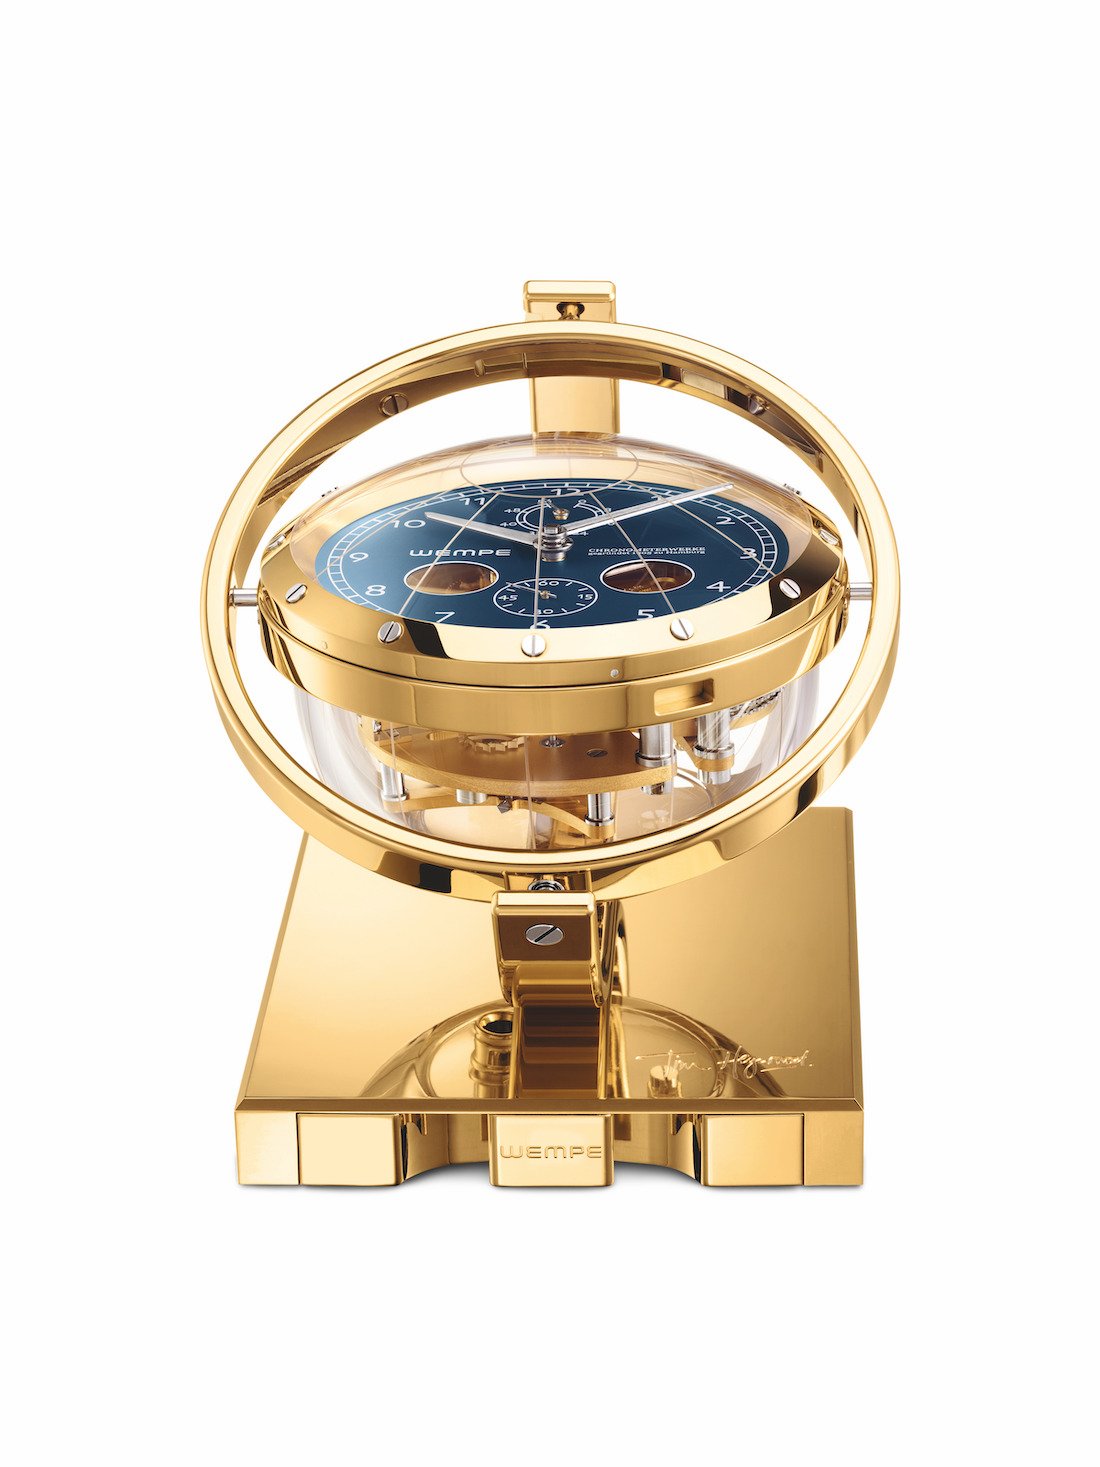 Wempe Marine Chronometer by Tim Heywood_CW800018_CW800019_PR-1.jpg